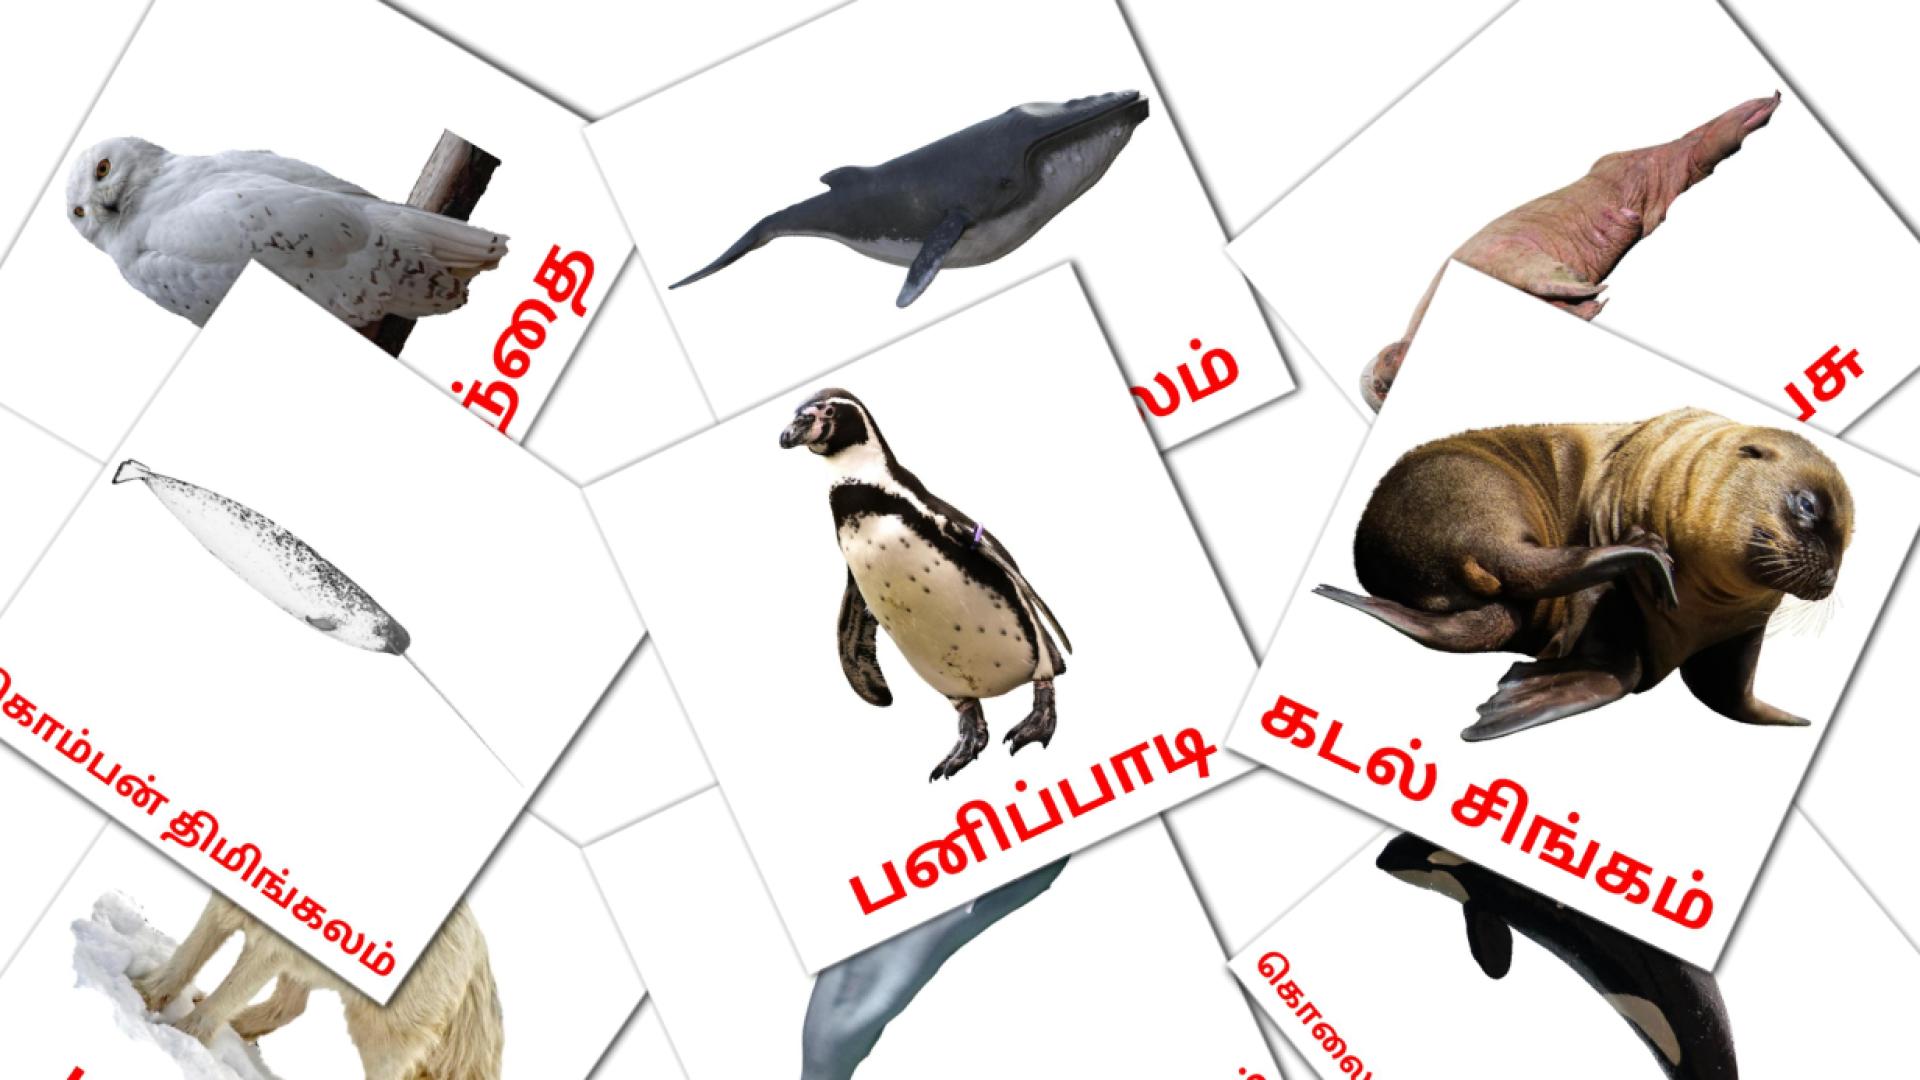 14 Bildkarten für பனி வாழ் விலங்குகள்